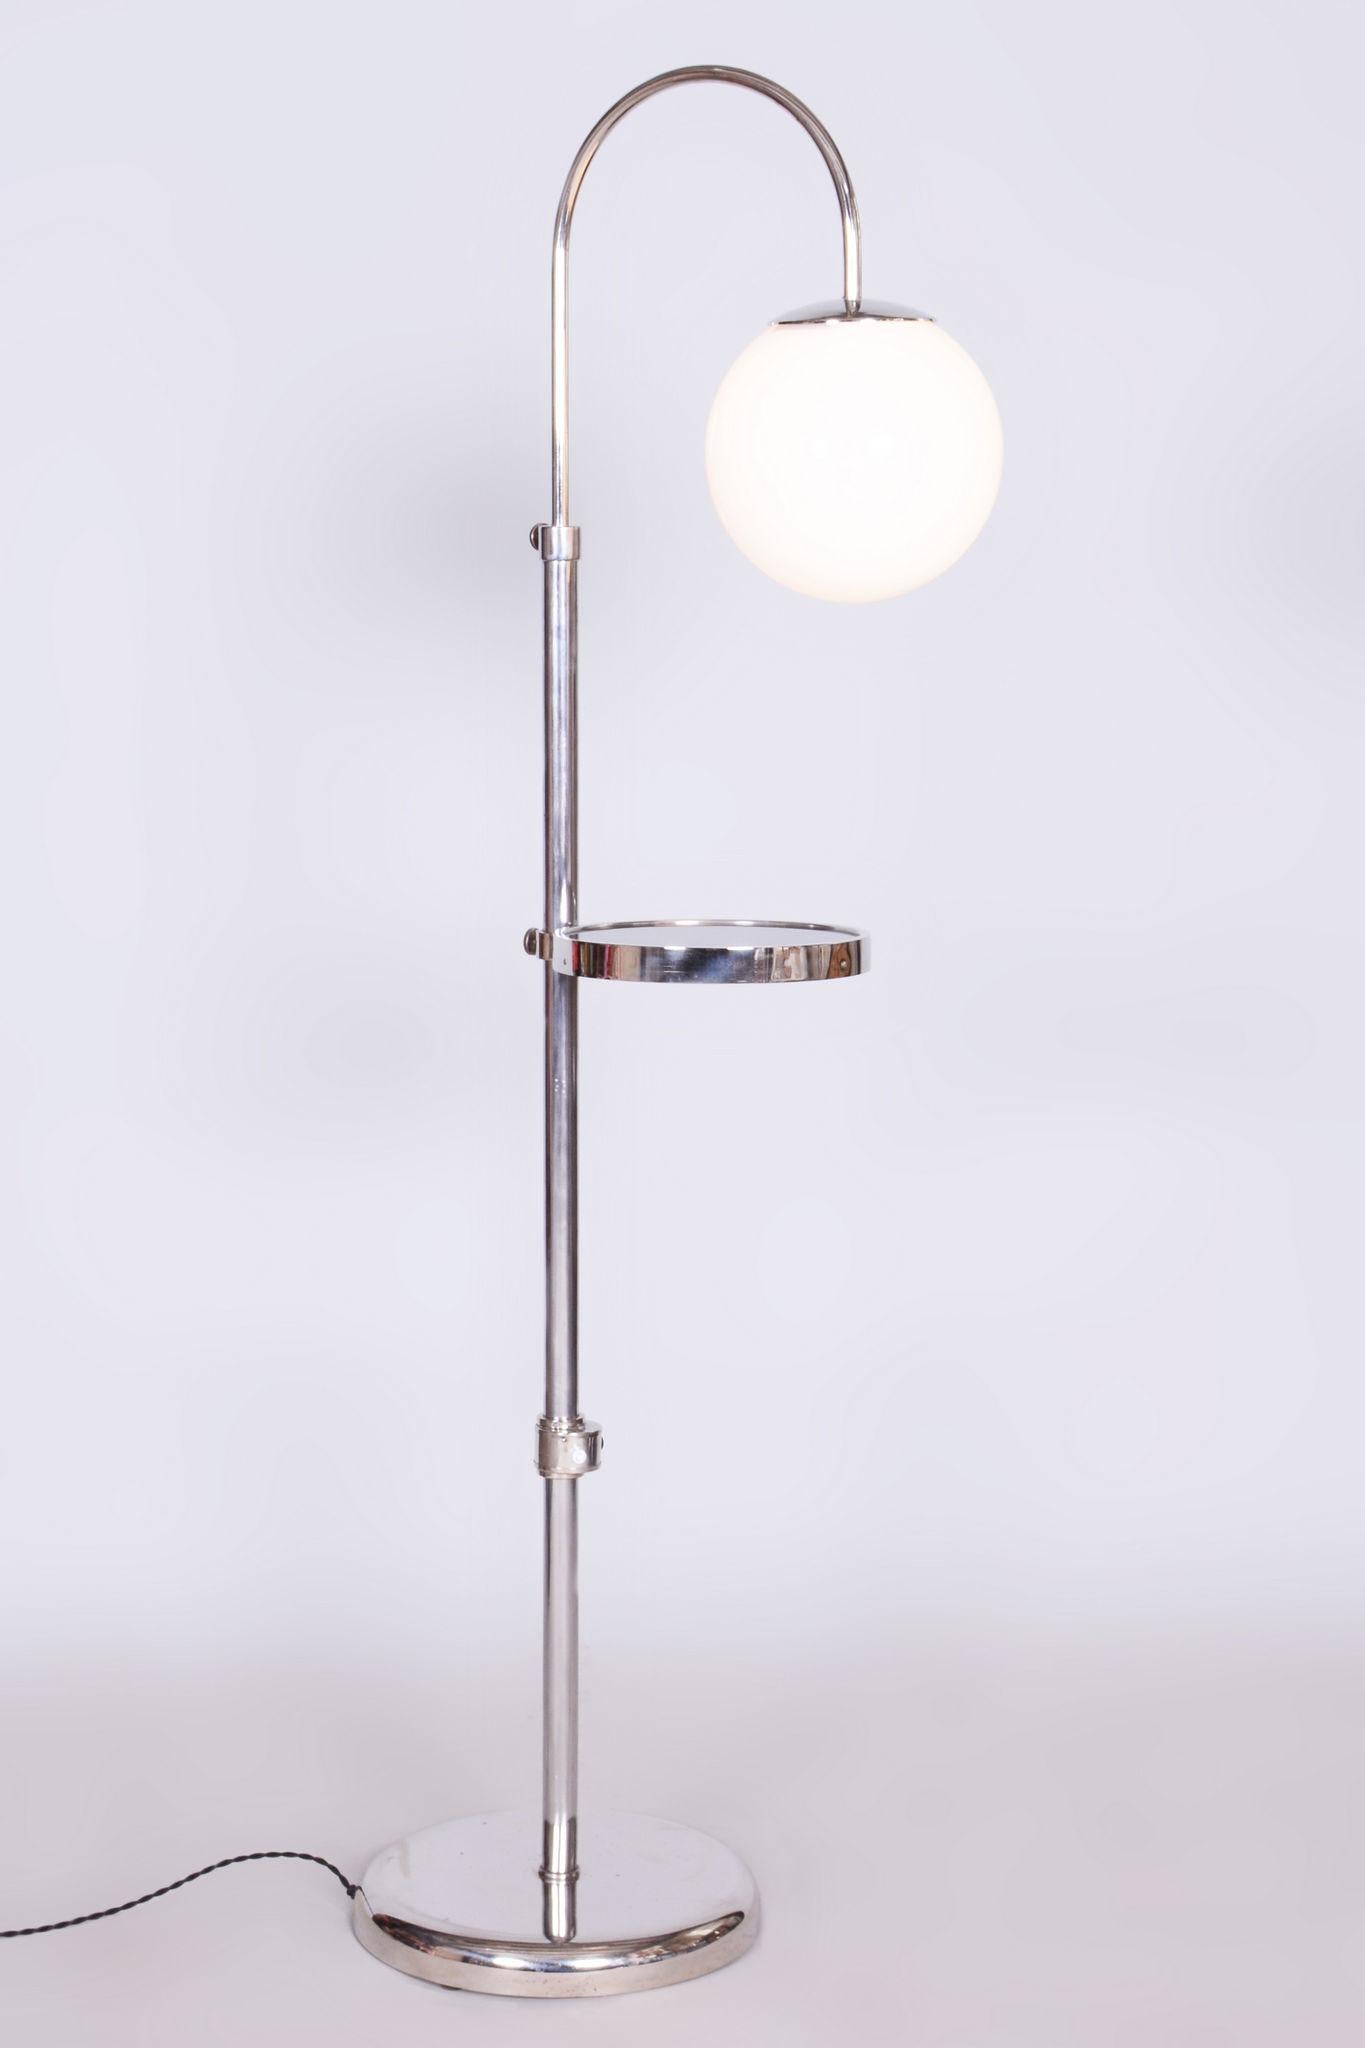 Restored Chrome Floor Lamp, Steel, Milk Glass, Adjustable Height, Czech, 1930s In Good Condition For Sale In Horomerice, CZ